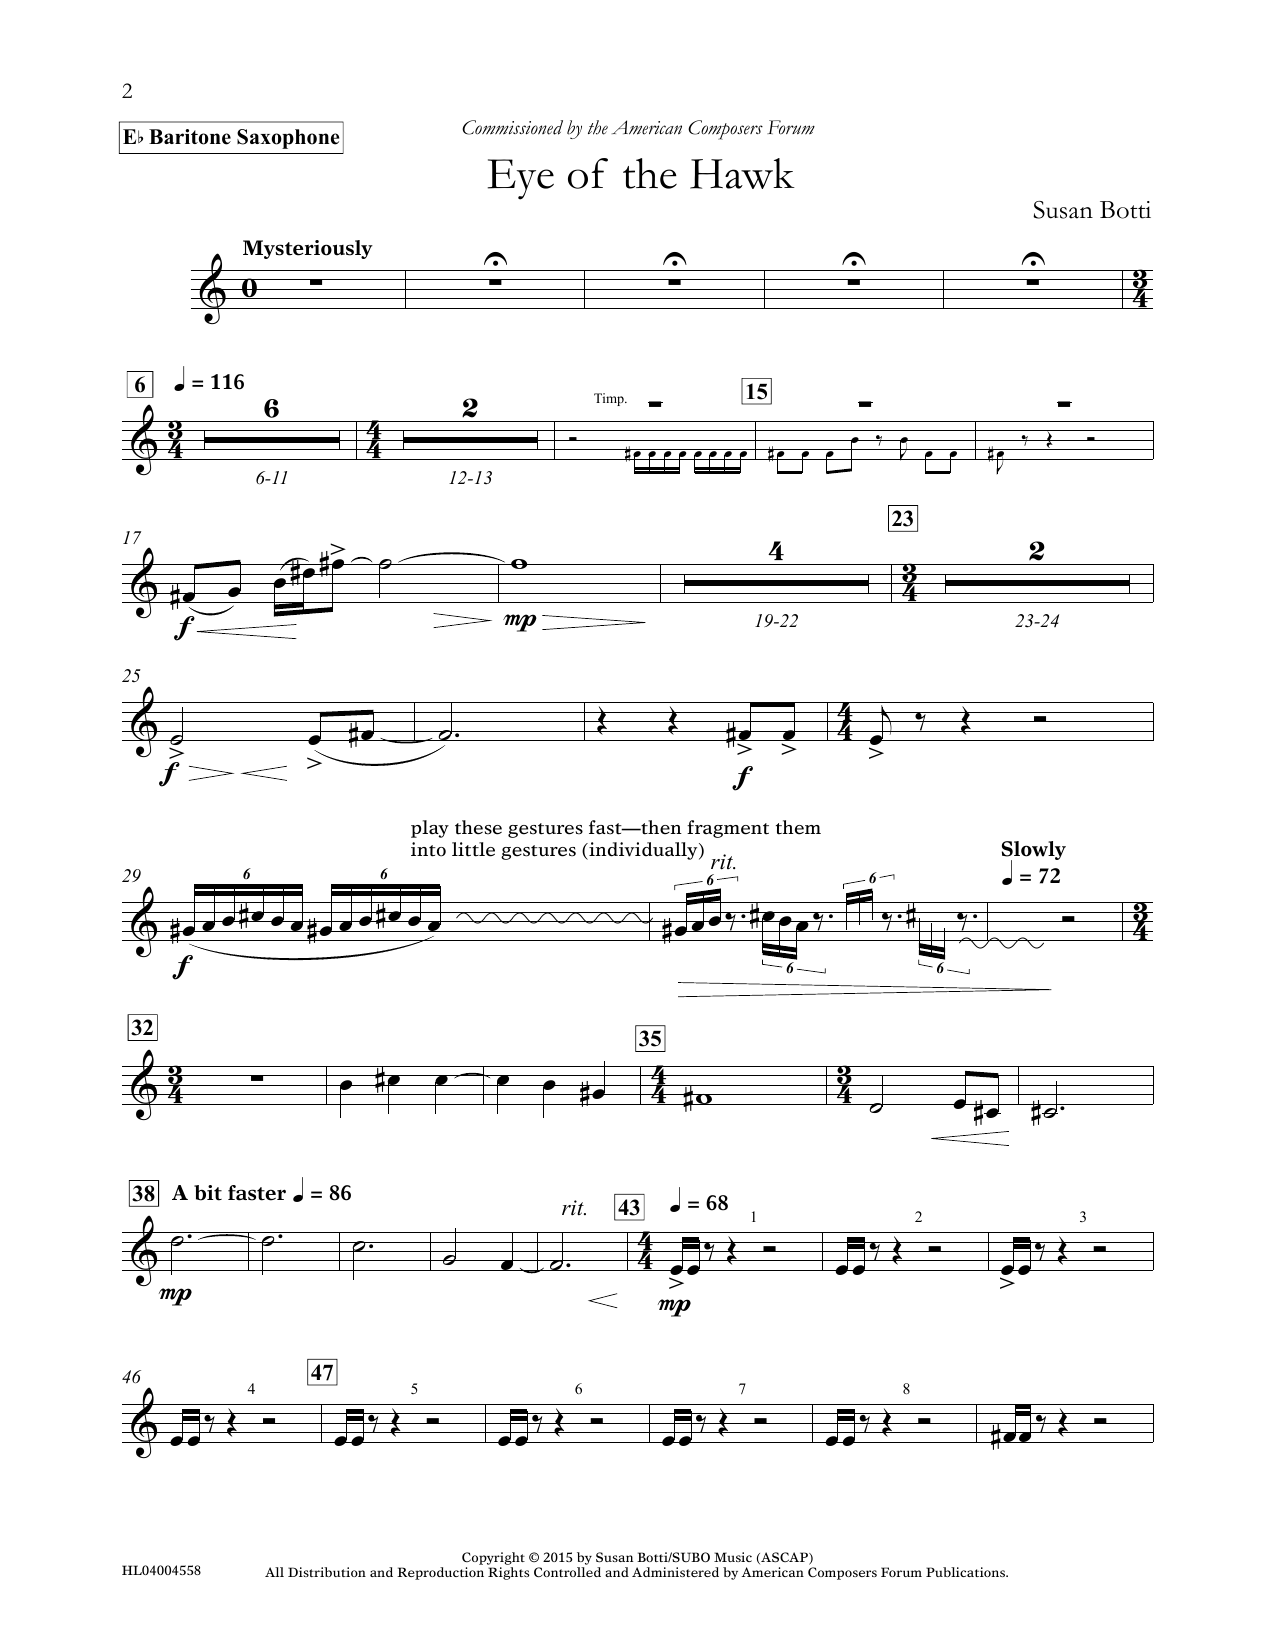 Susan Botti Eye of the Hawk - Eb Baritone Saxophone Sheet Music Notes & Chords for Concert Band - Download or Print PDF